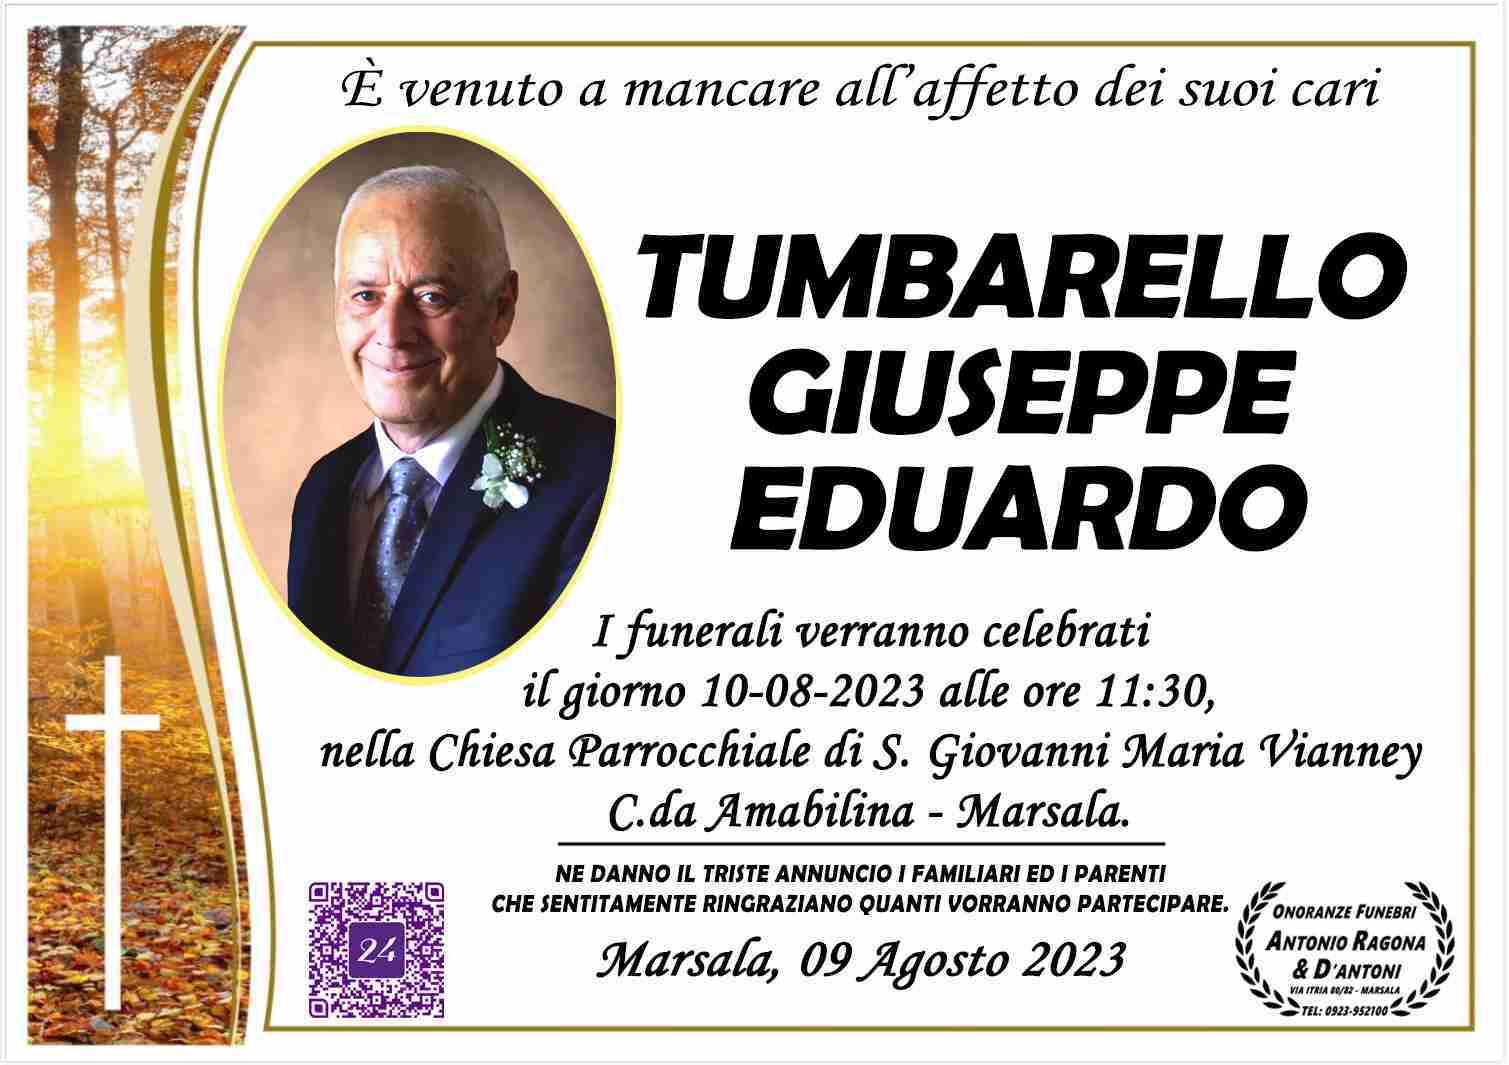 Giuseppe Eduardo Tumbarello